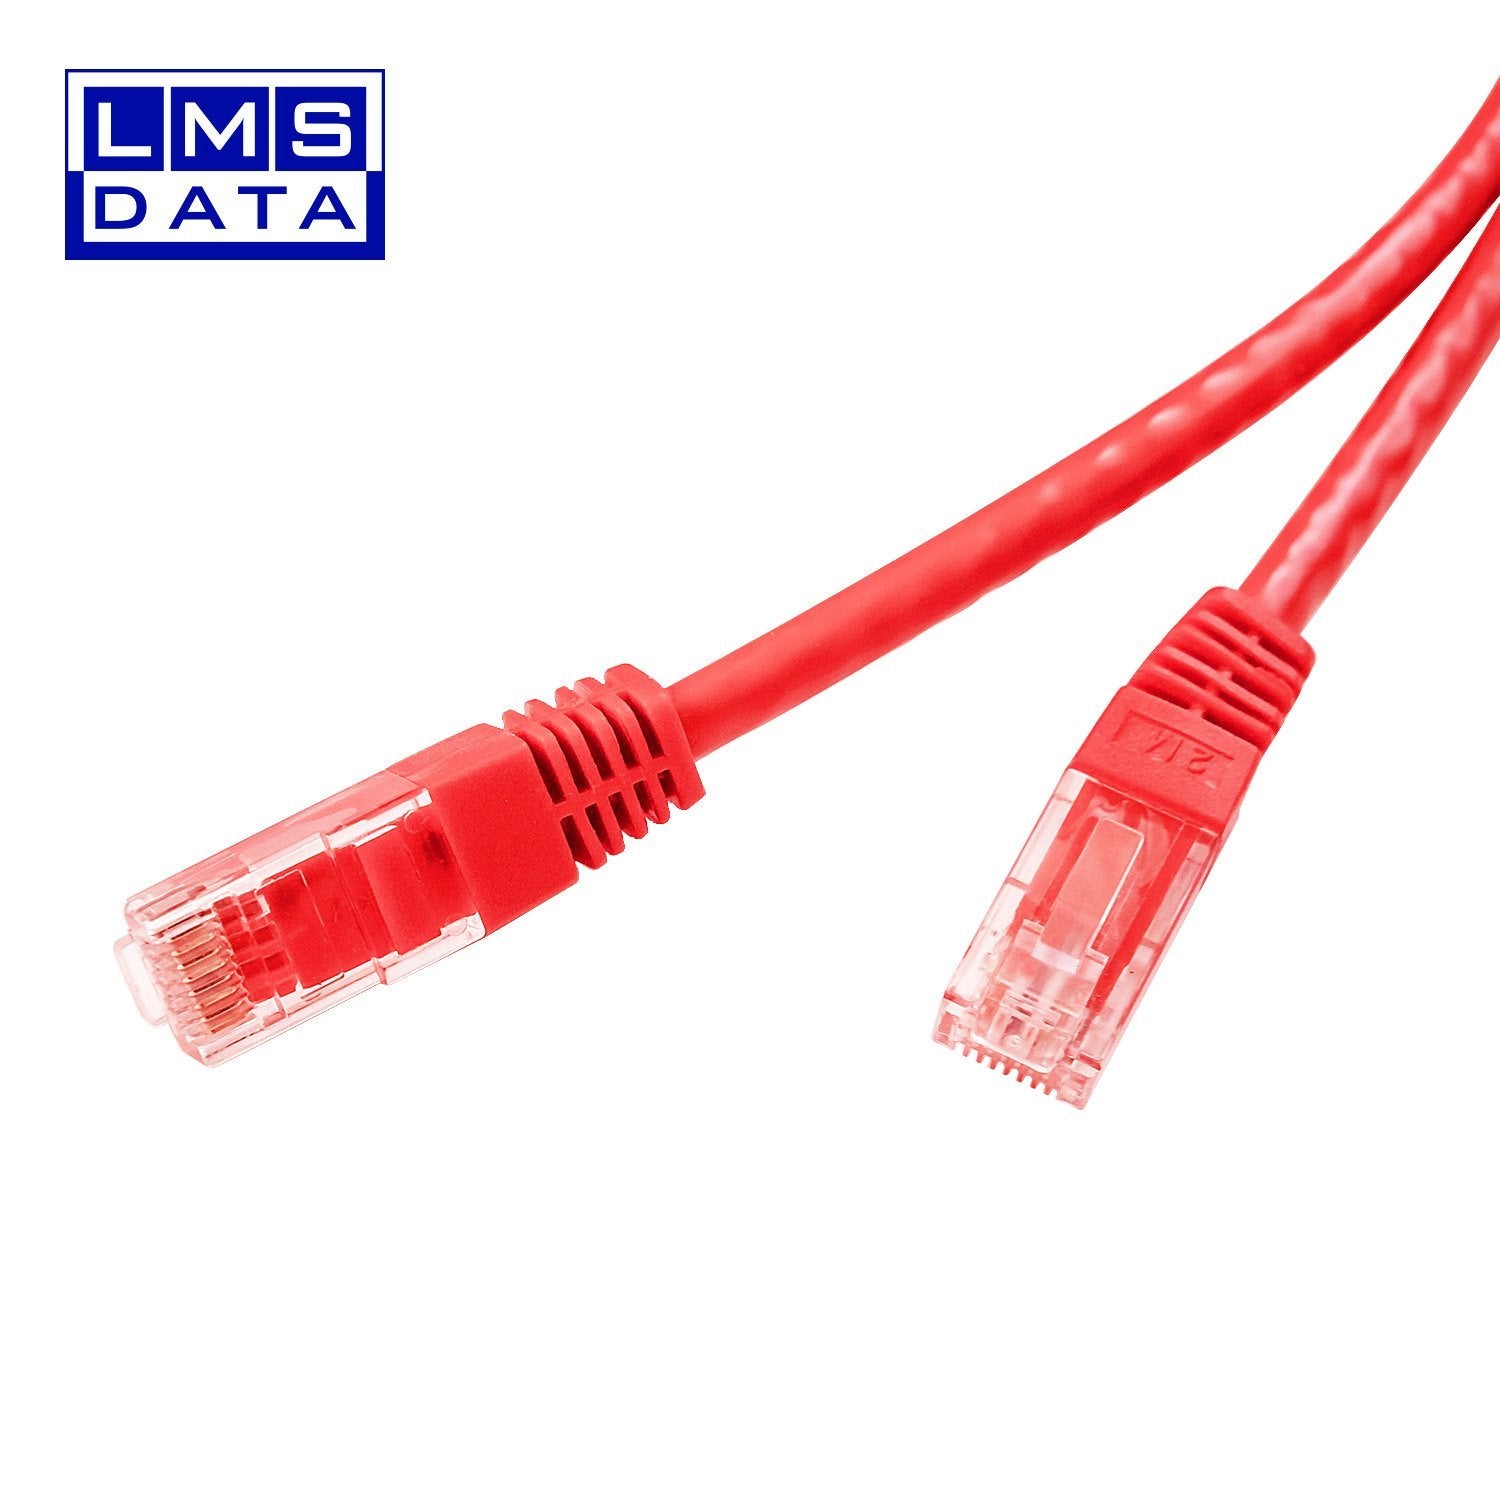 20.0m  LMS Data Ethernet Cat6 RJ45 UTP Patch cable cord, LAN 10/100/1000Mbit/s Cable suitable - Ethernet Cable 20m Cat6